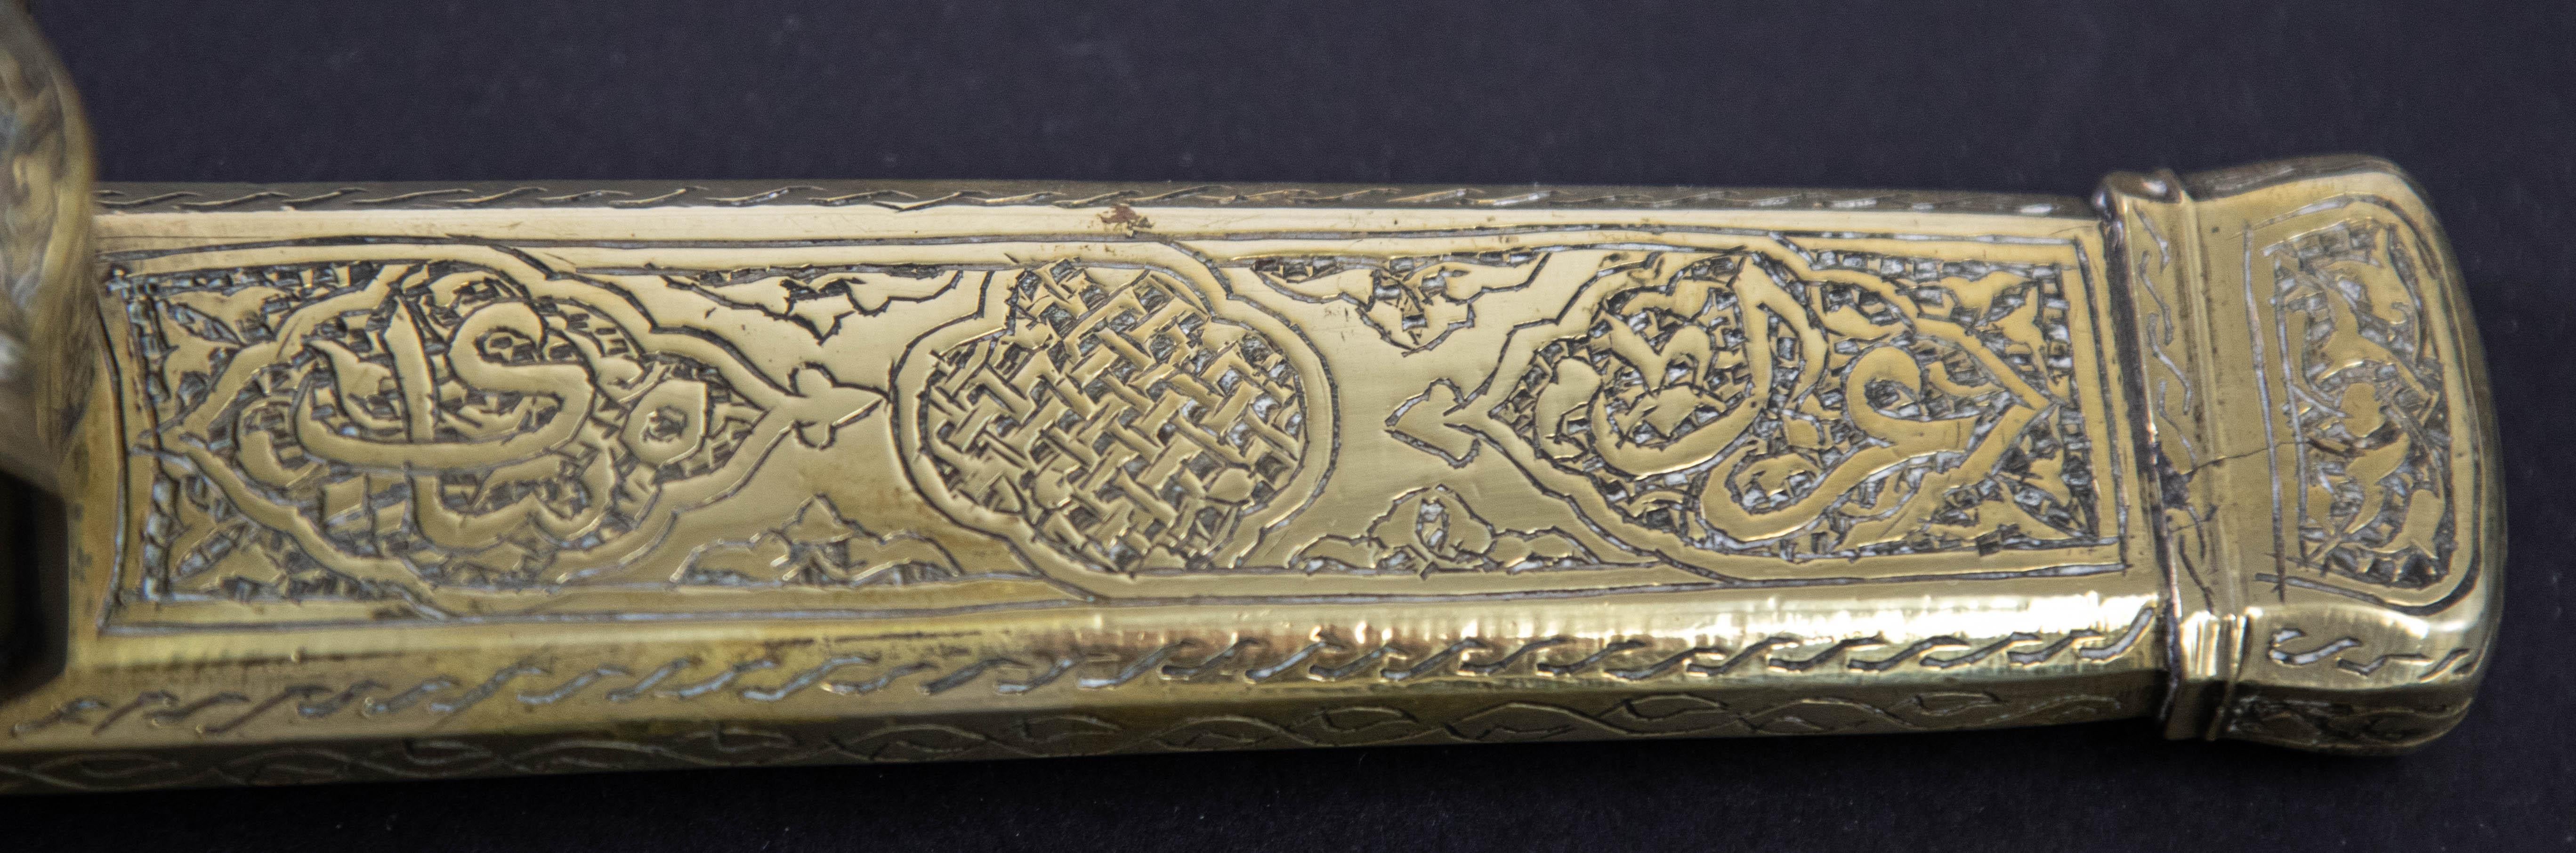 Antique Ottoman Turkish Brass Inkwell Qalamdan with Arabic Calligraphy Writing For Sale 7